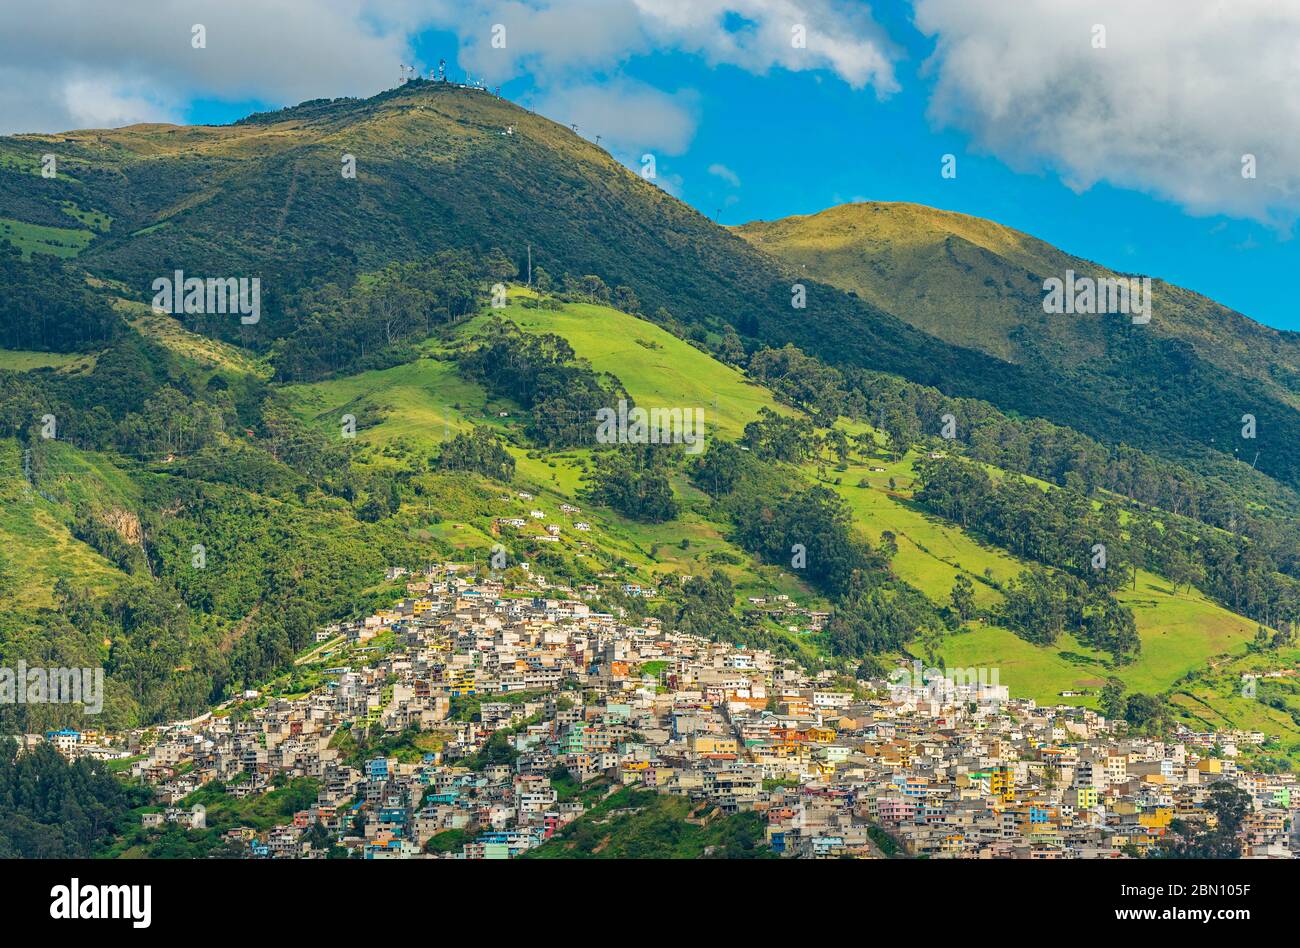 Cityscape of a district in Quito built on the Pichincha Volcano at Sunrise, Ecuador. Stock Photo